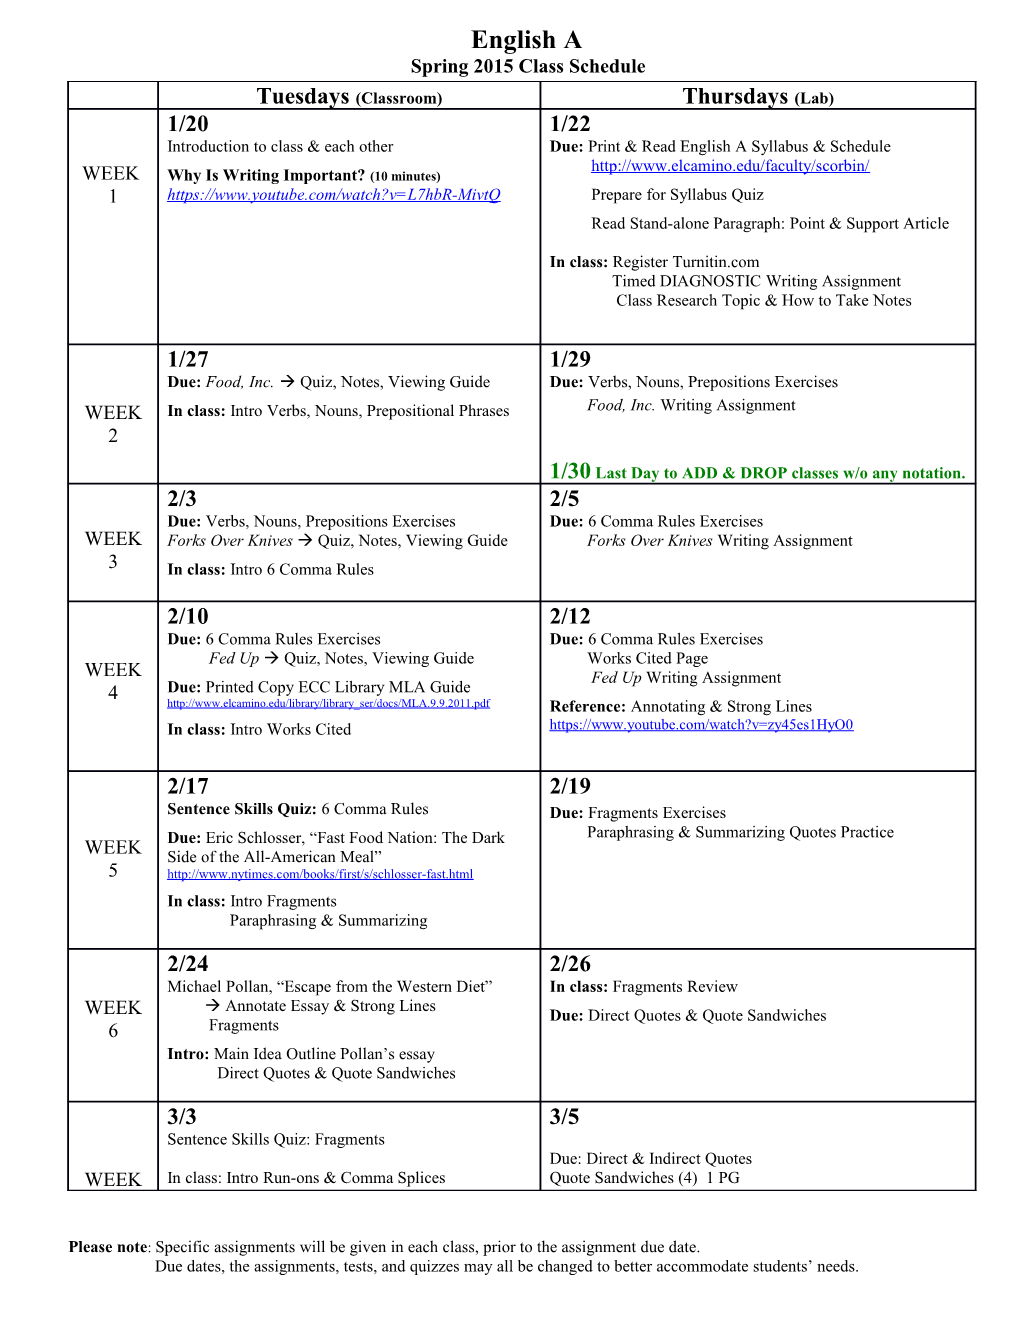 Spring 2015 Class Schedule